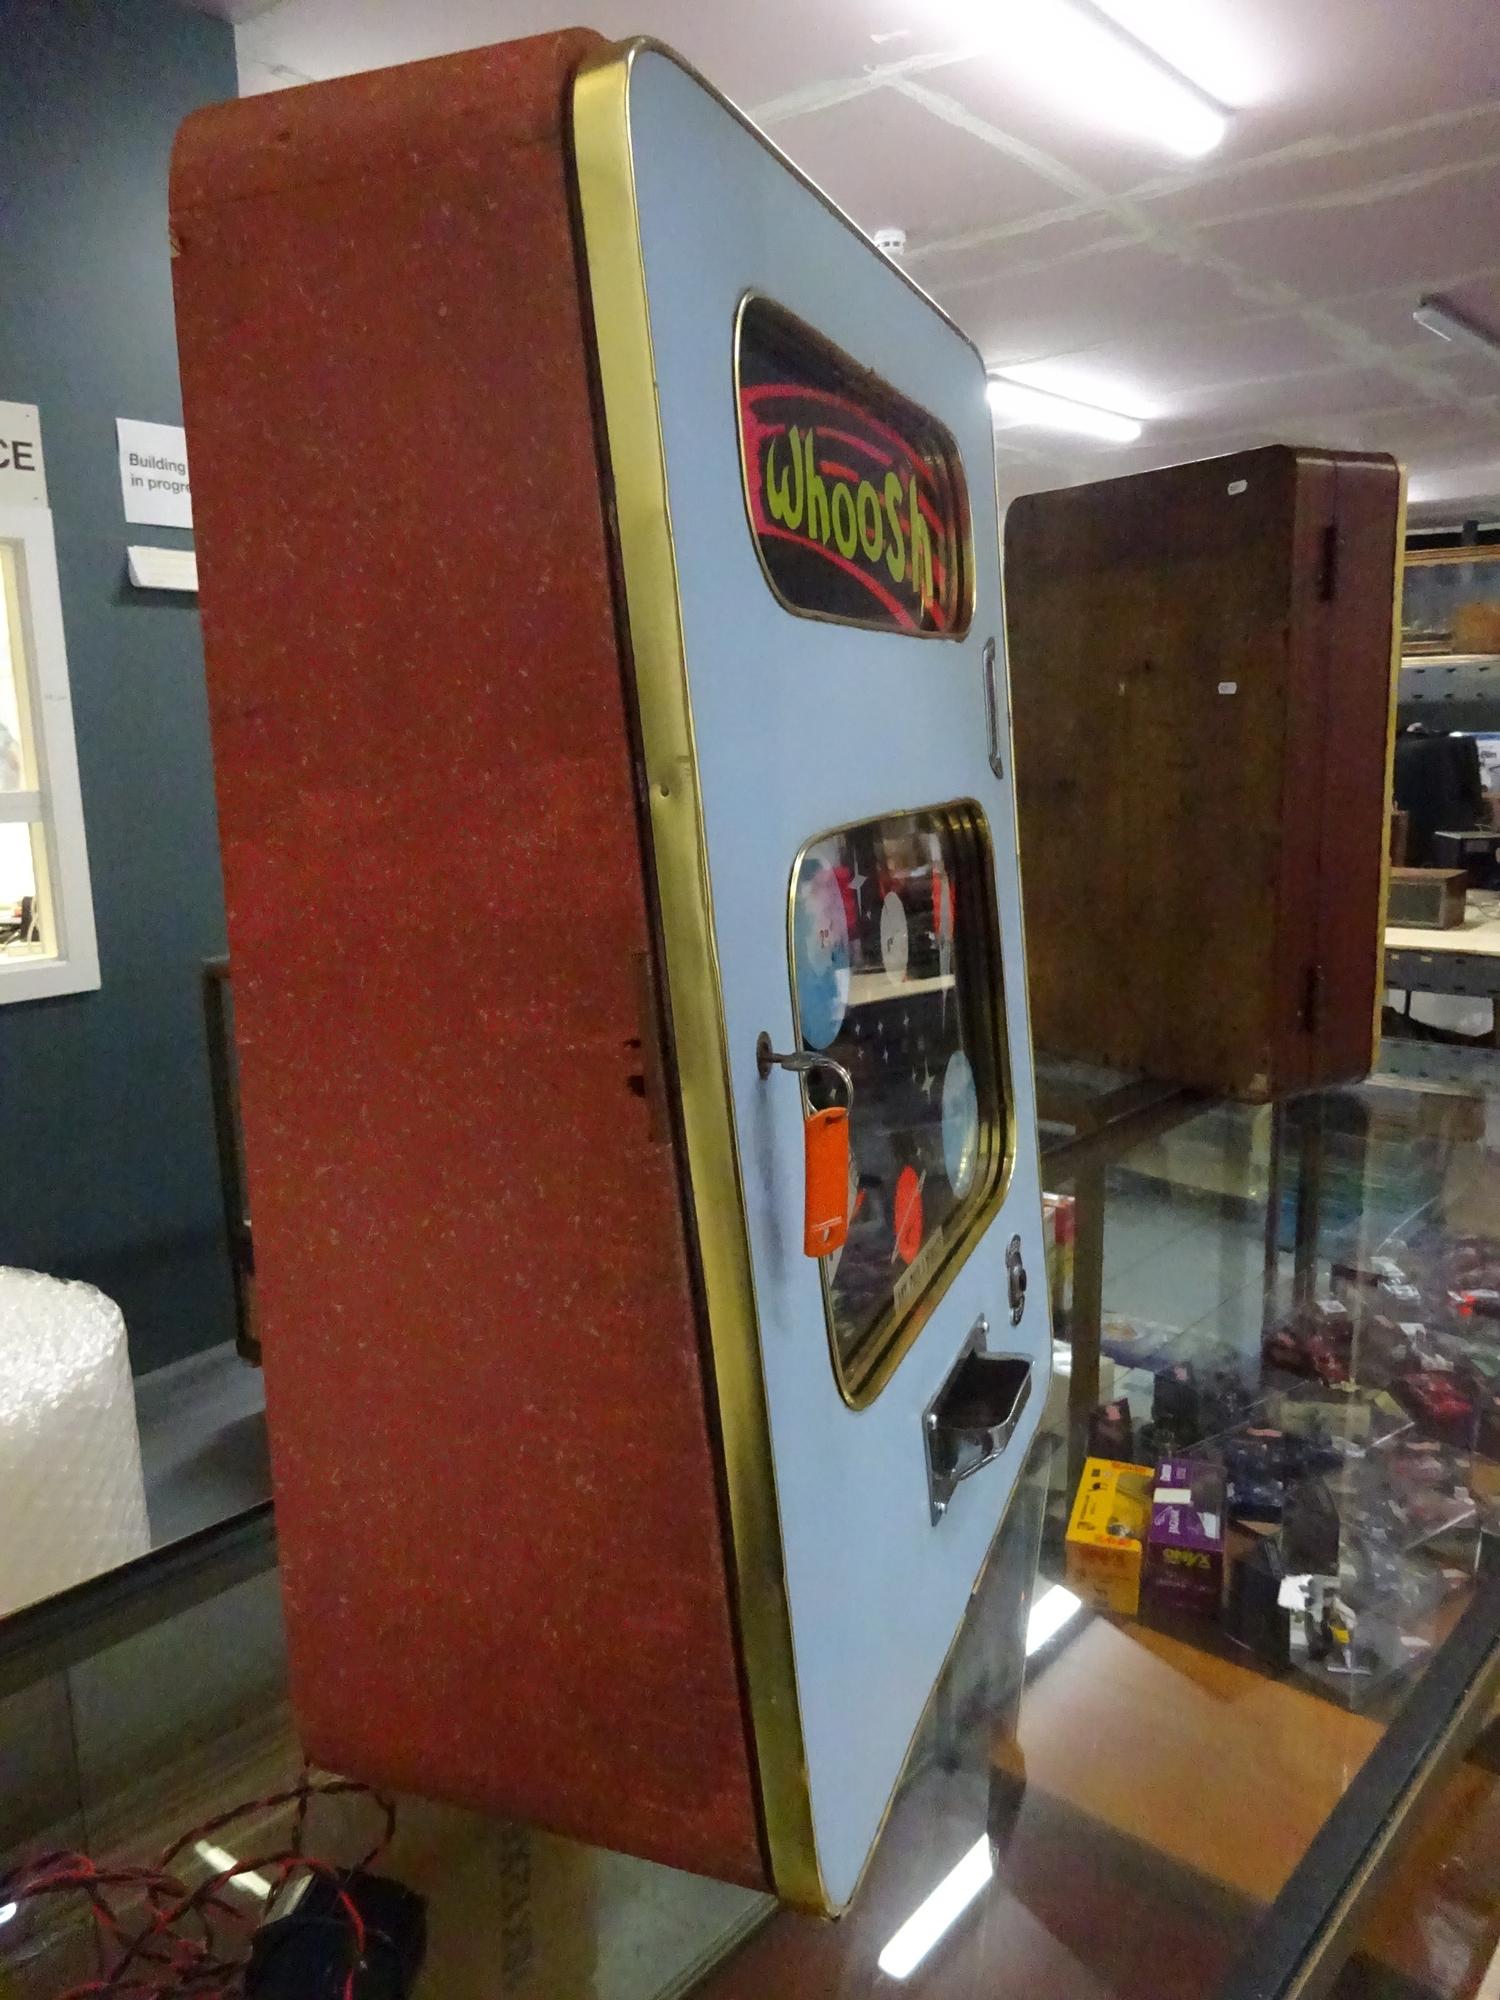 WHOOSH vintage arcade machine - Image 2 of 3